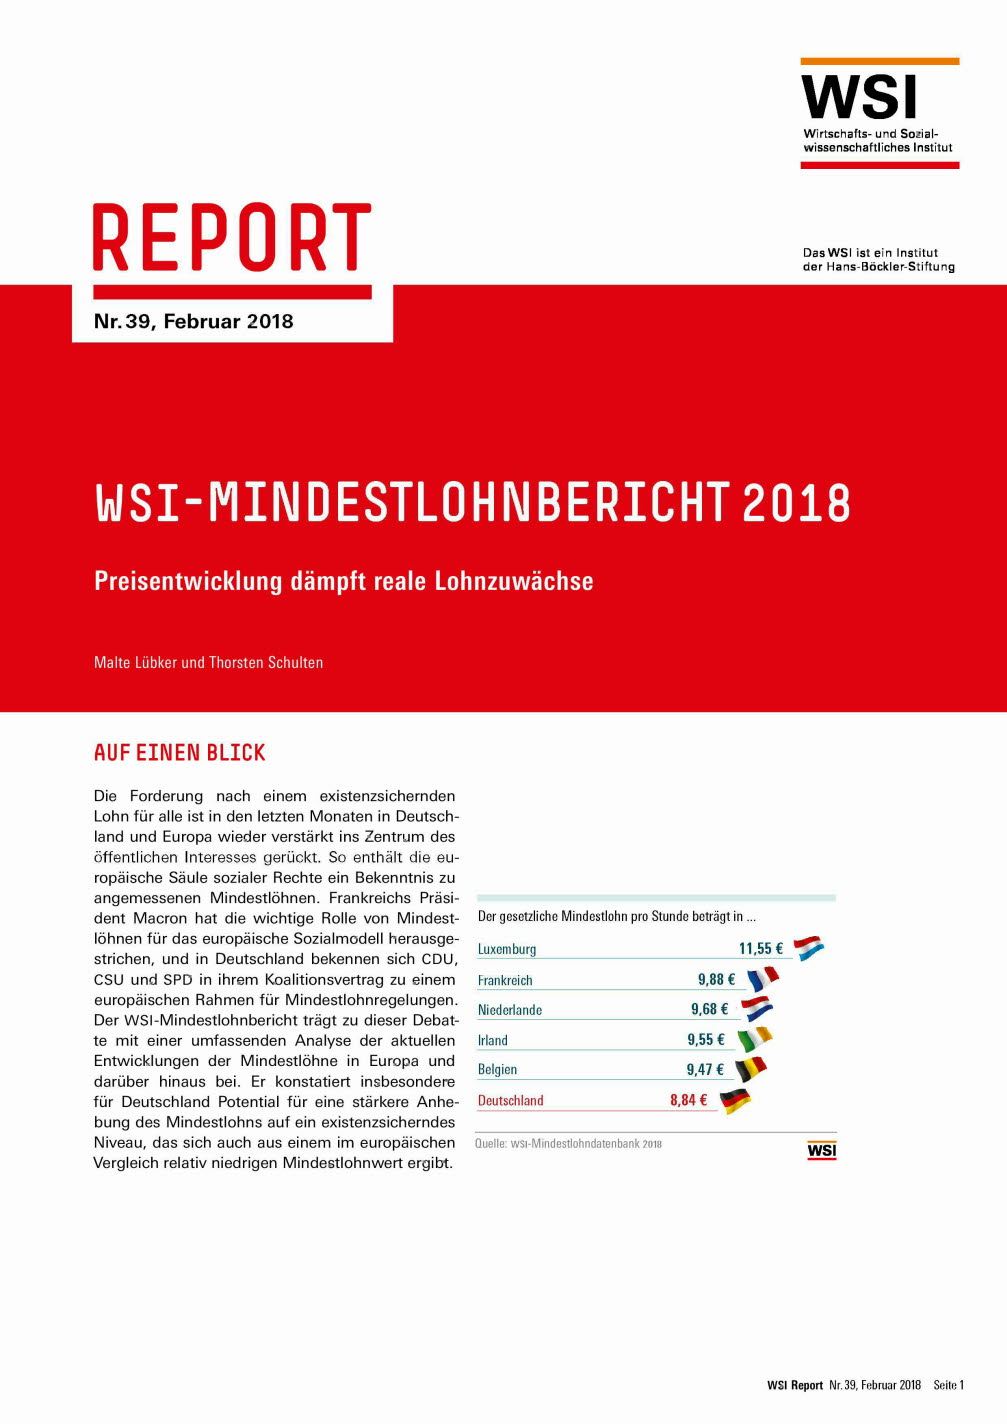 WSI-Mindestlohnbericht 2018